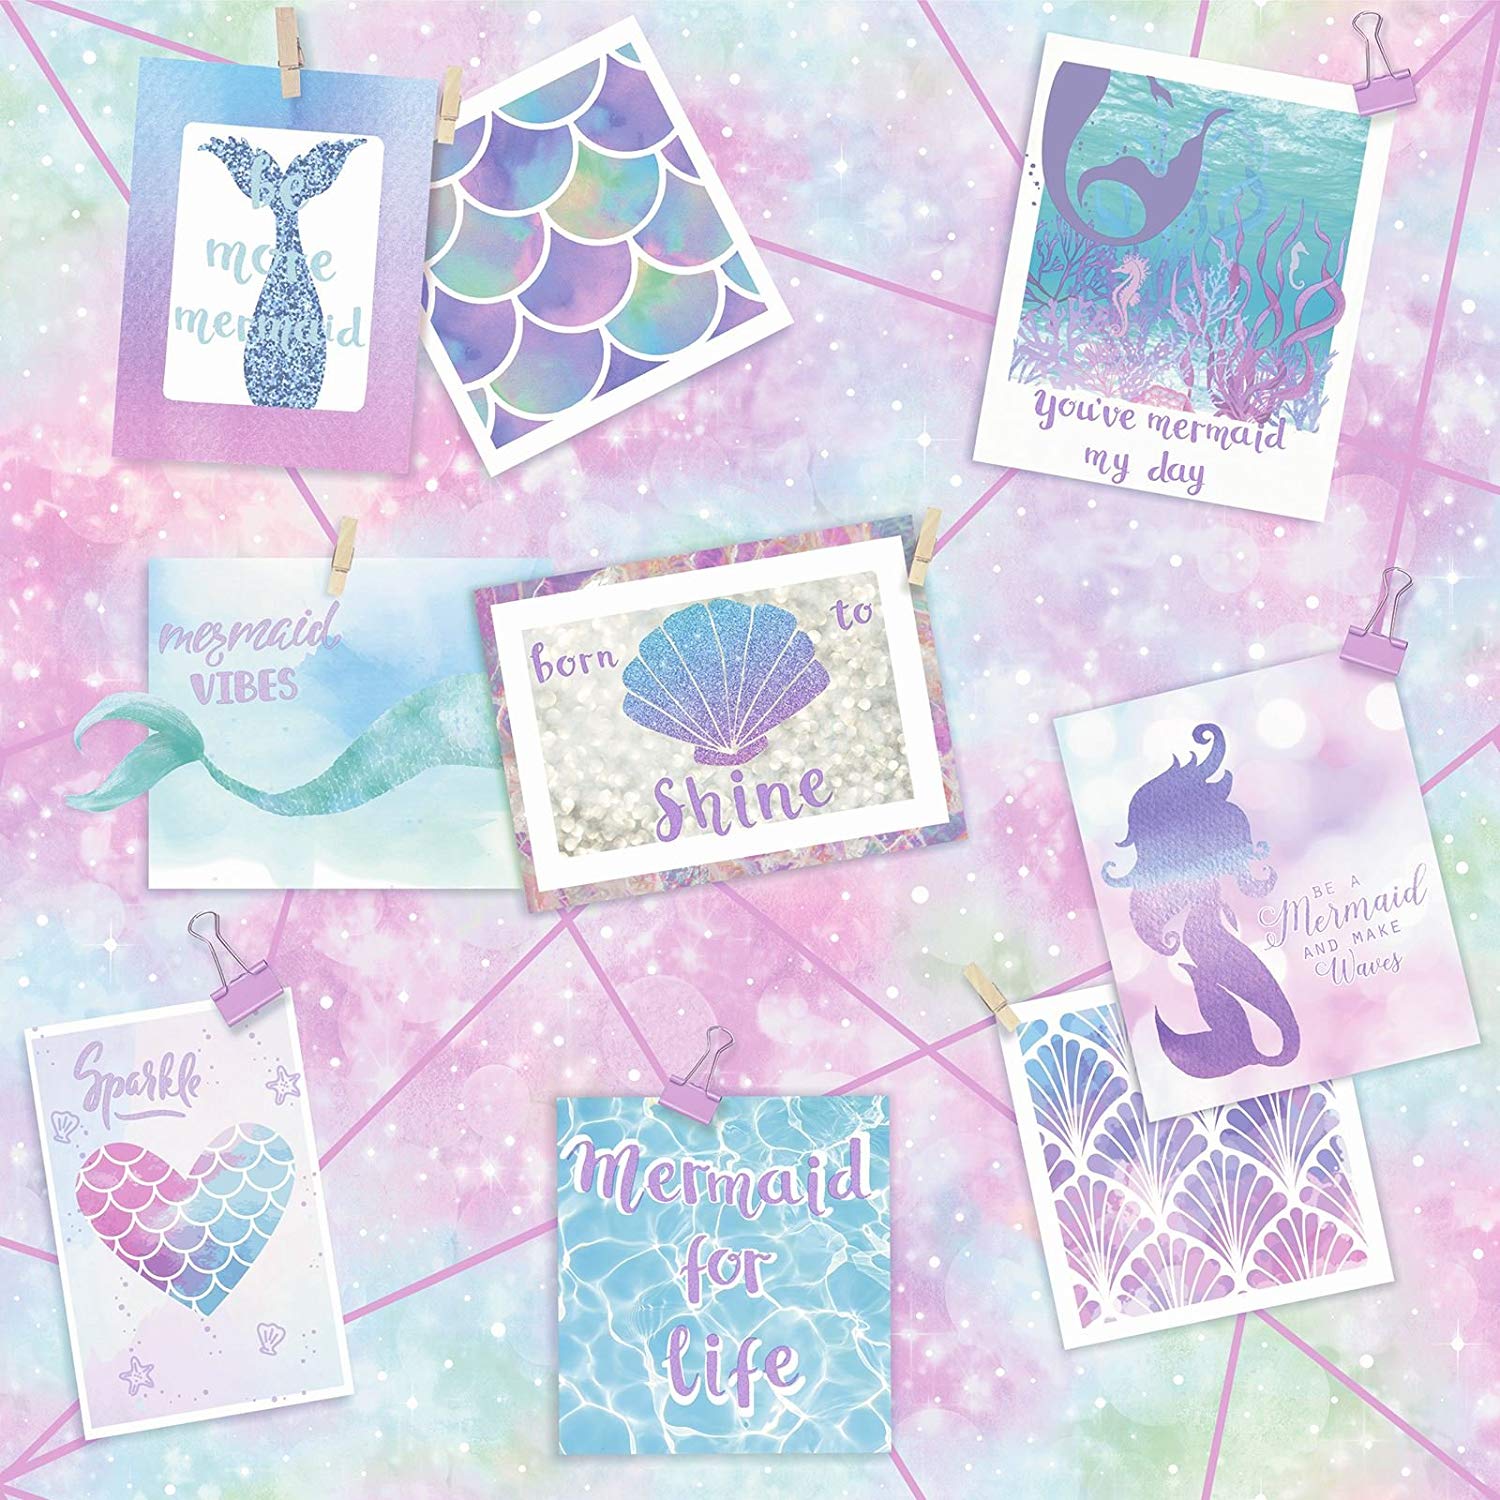 Unicorn And Mermaid Wallpapers Top Free Unicorn And Mermaid